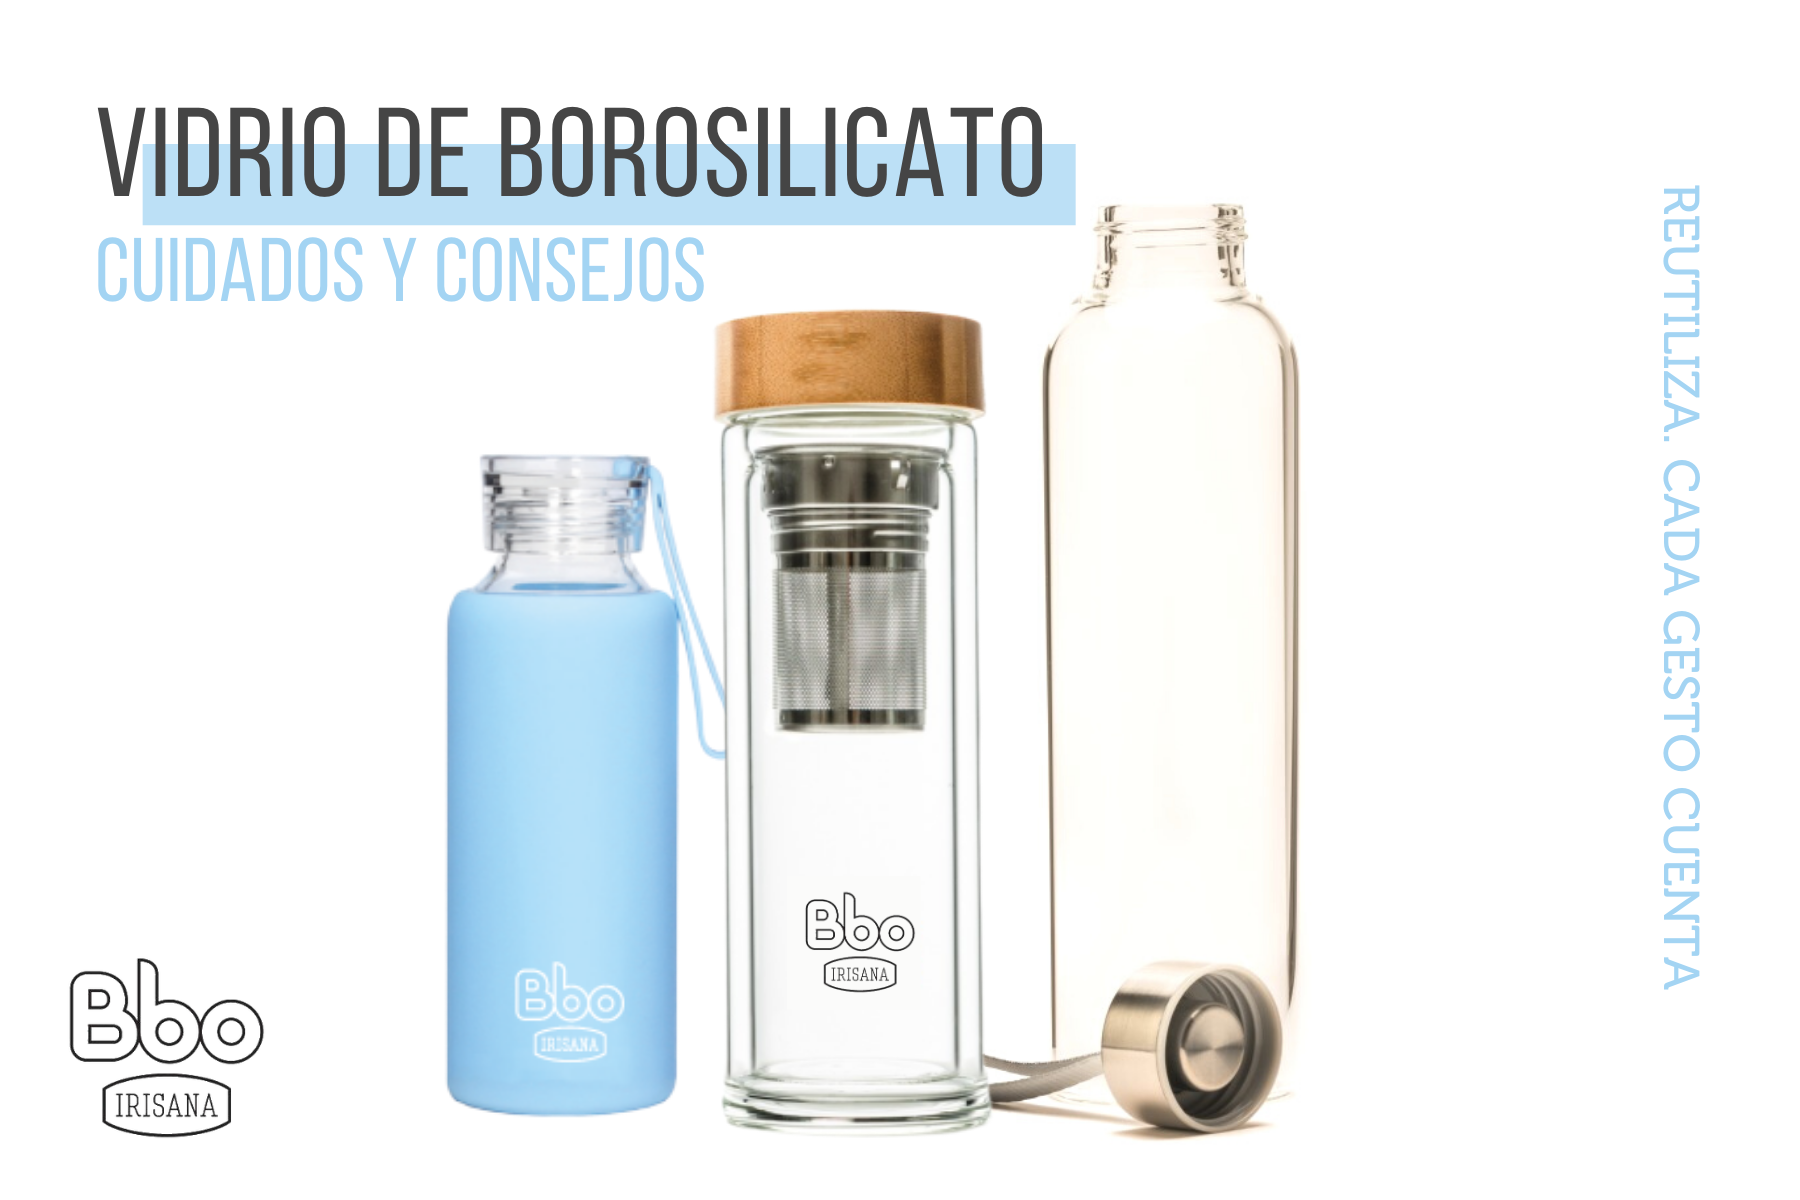  Tips and care for your Bbo Irisana borosilicate glass bottle